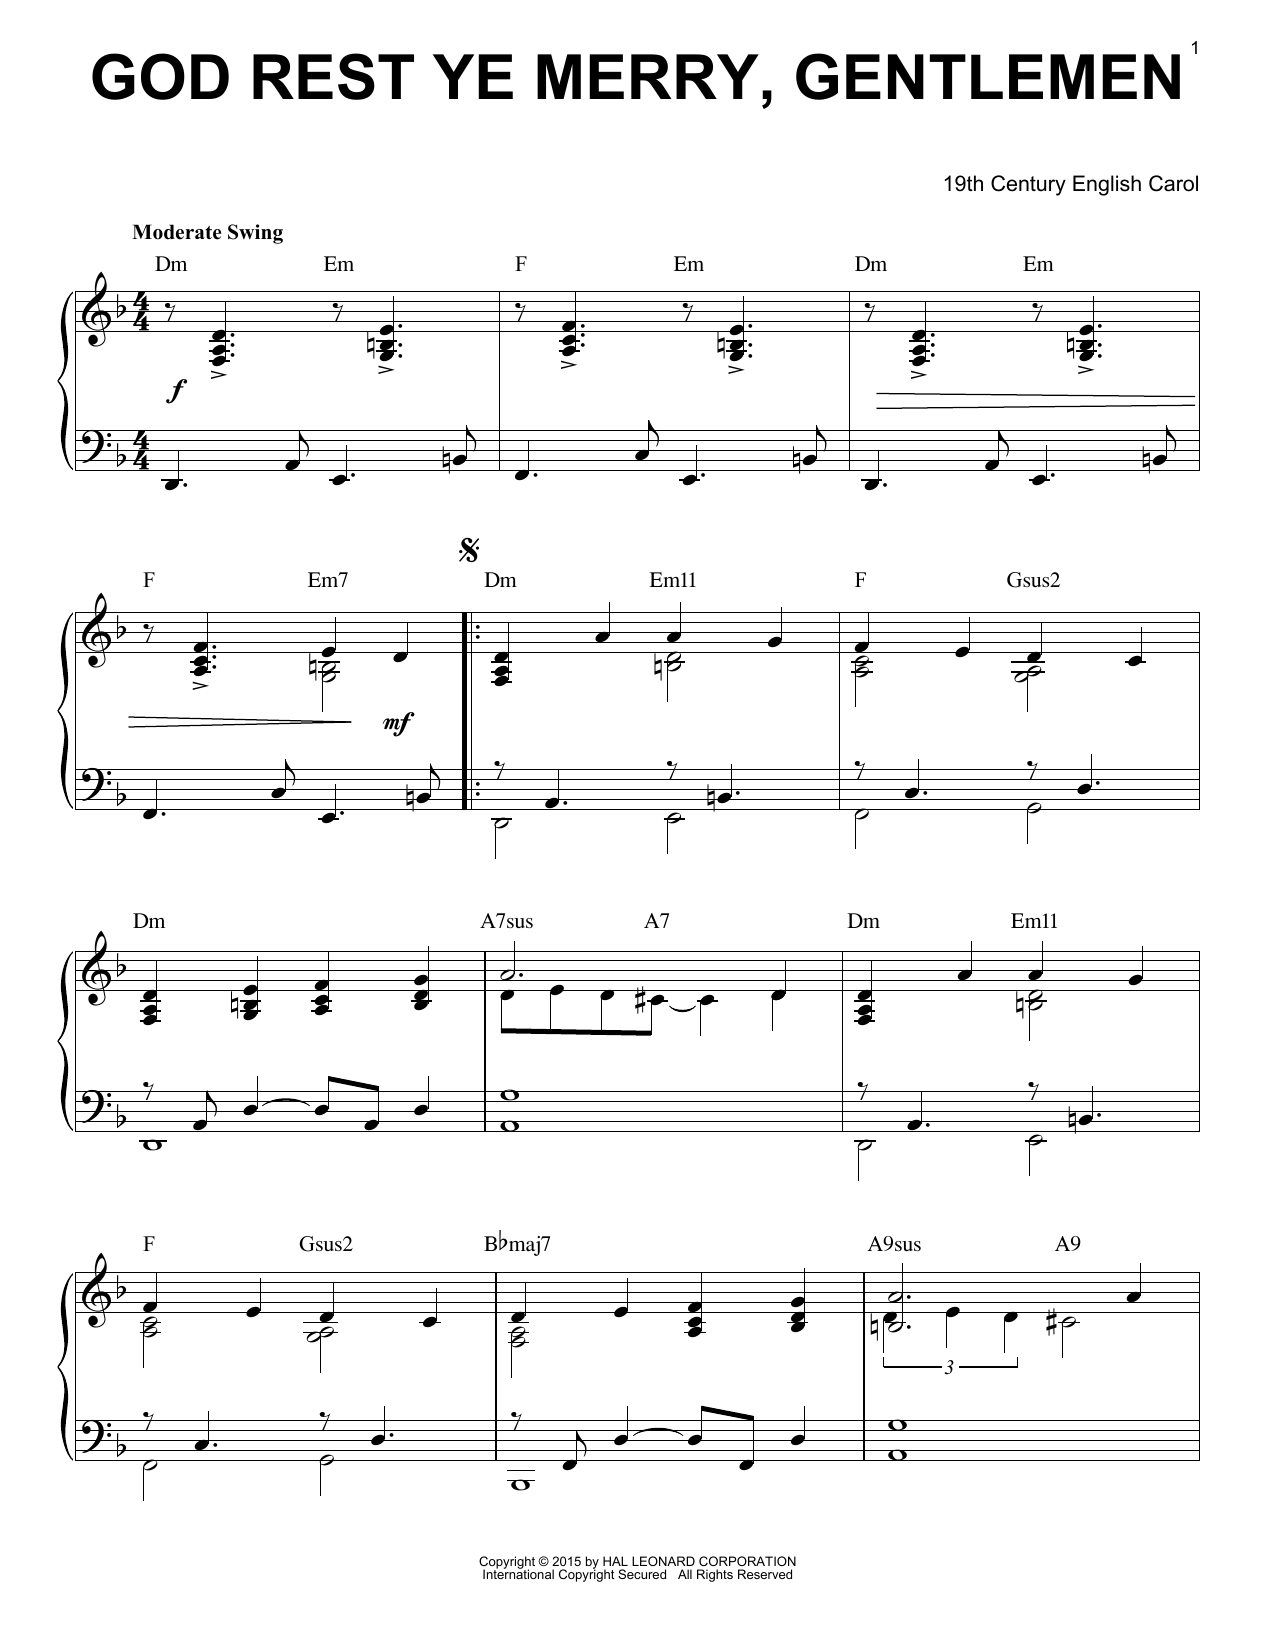 Download 19th Century English Carol God Rest Ye Merry, Gentlemen [Jazz vers Sheet Music